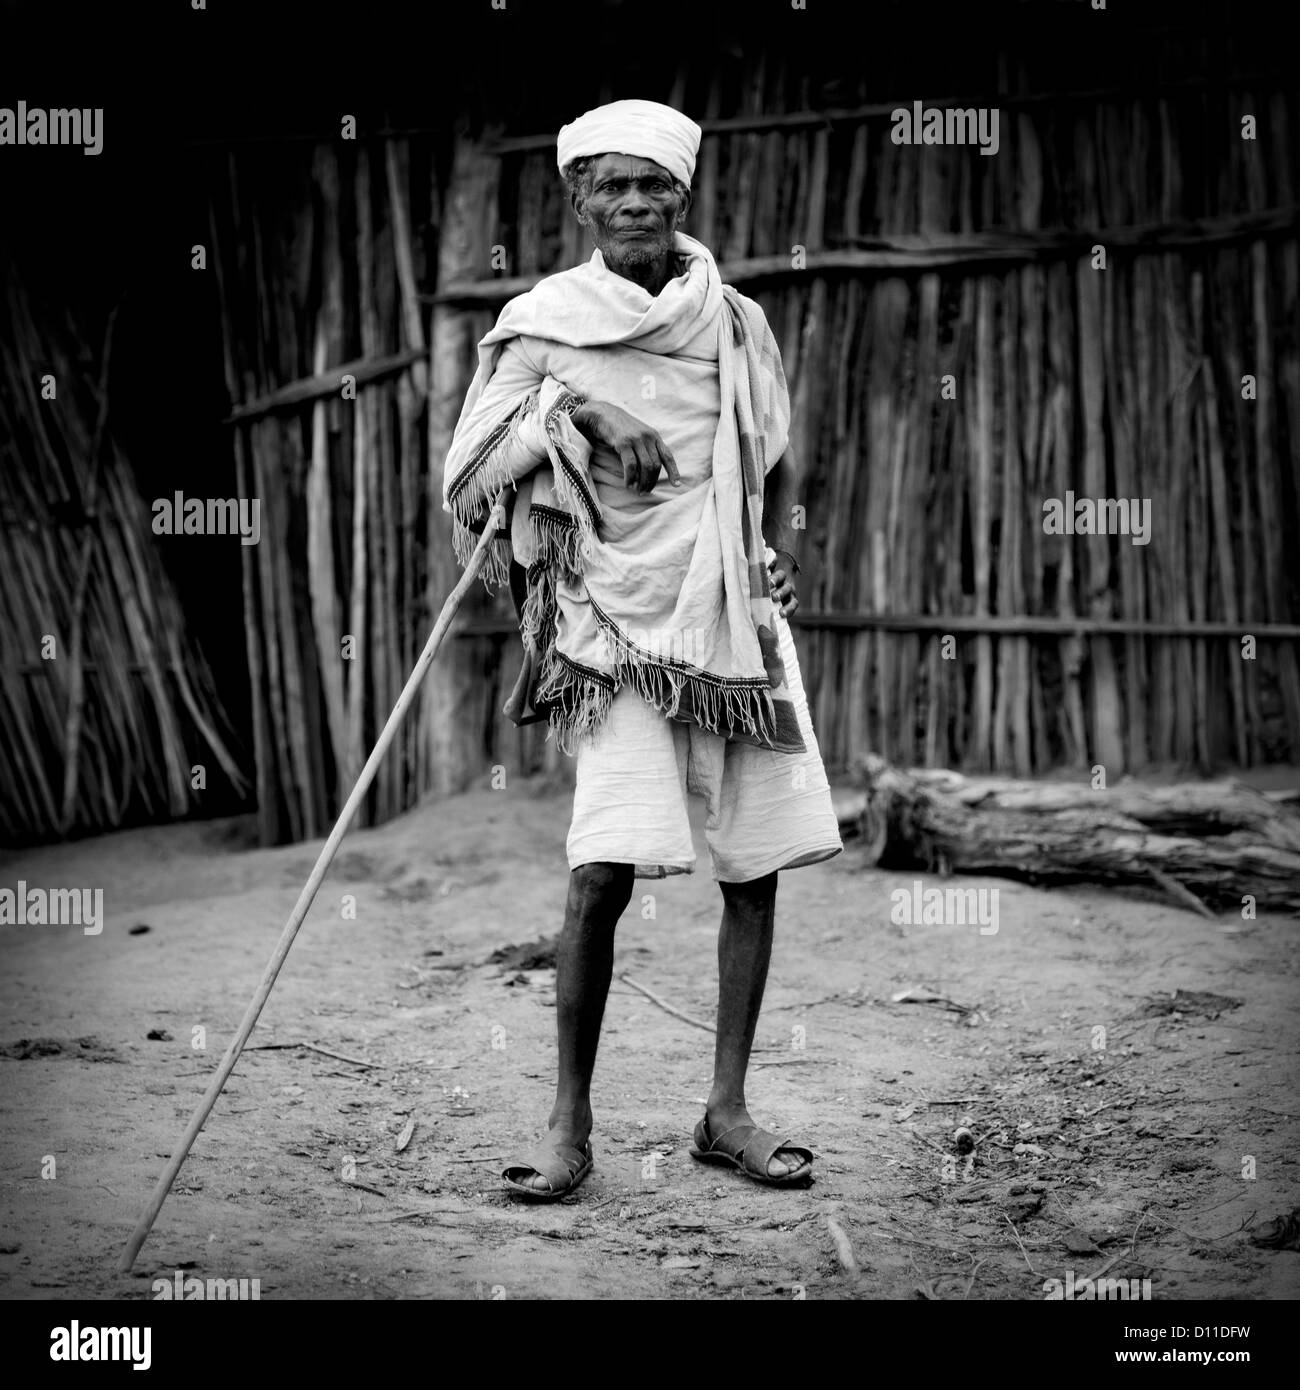 Black And White Portrait Of An Old Borana Tribe Man With Stick, Yabello, Ethiopia Stock Photo